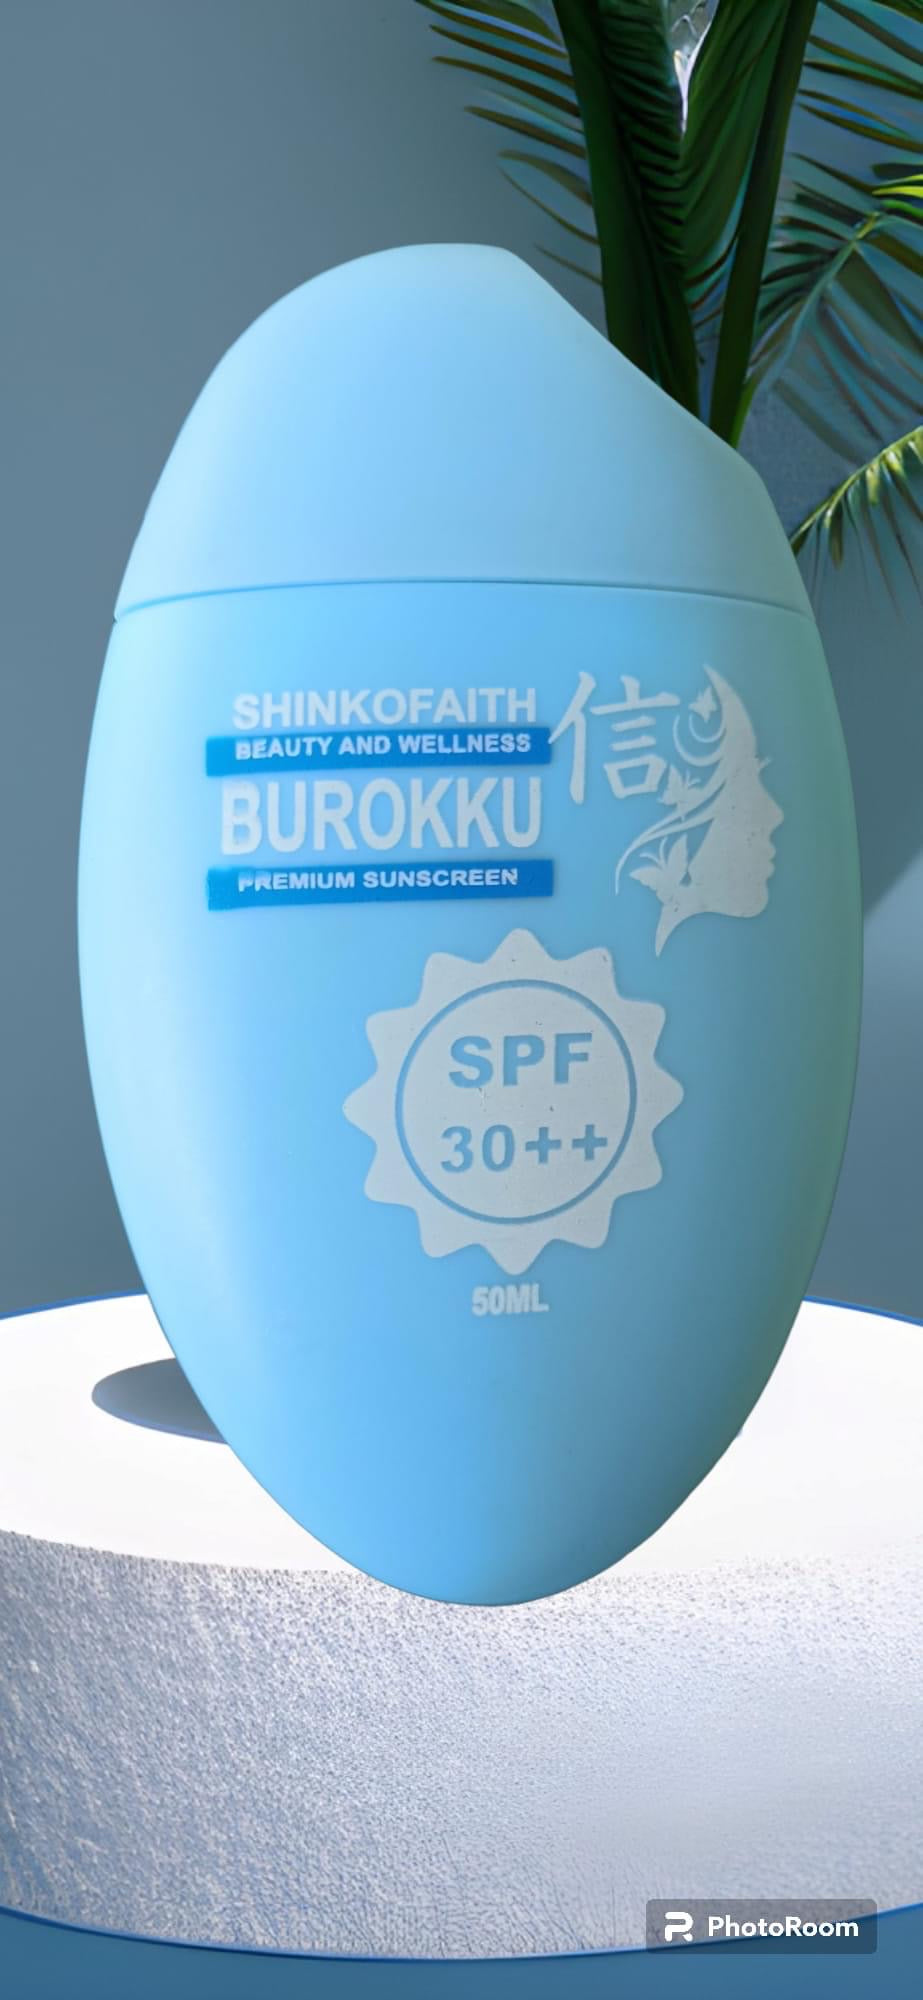 Shinko Faith Burokku Sunscreen Spf 30++